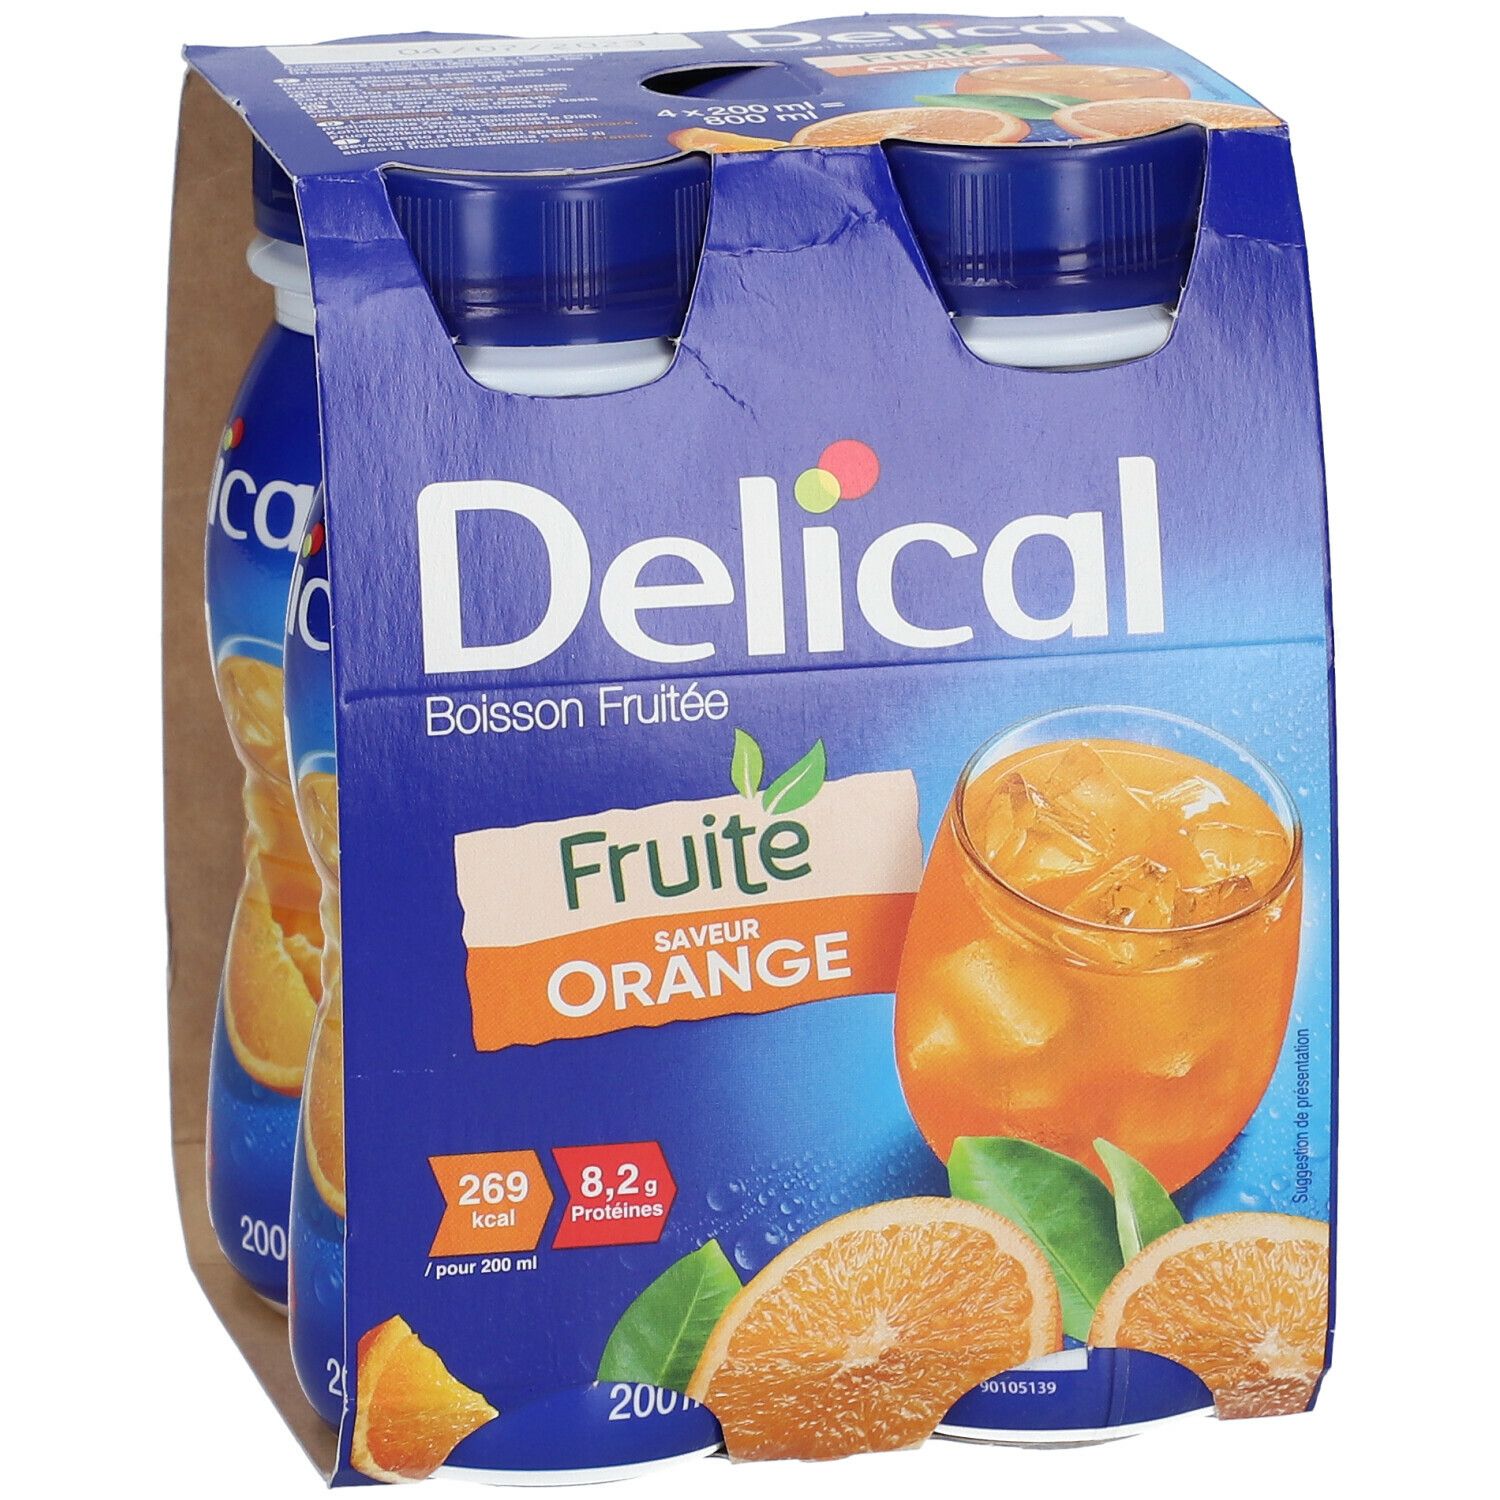 Delical Boisson fruitée Orange